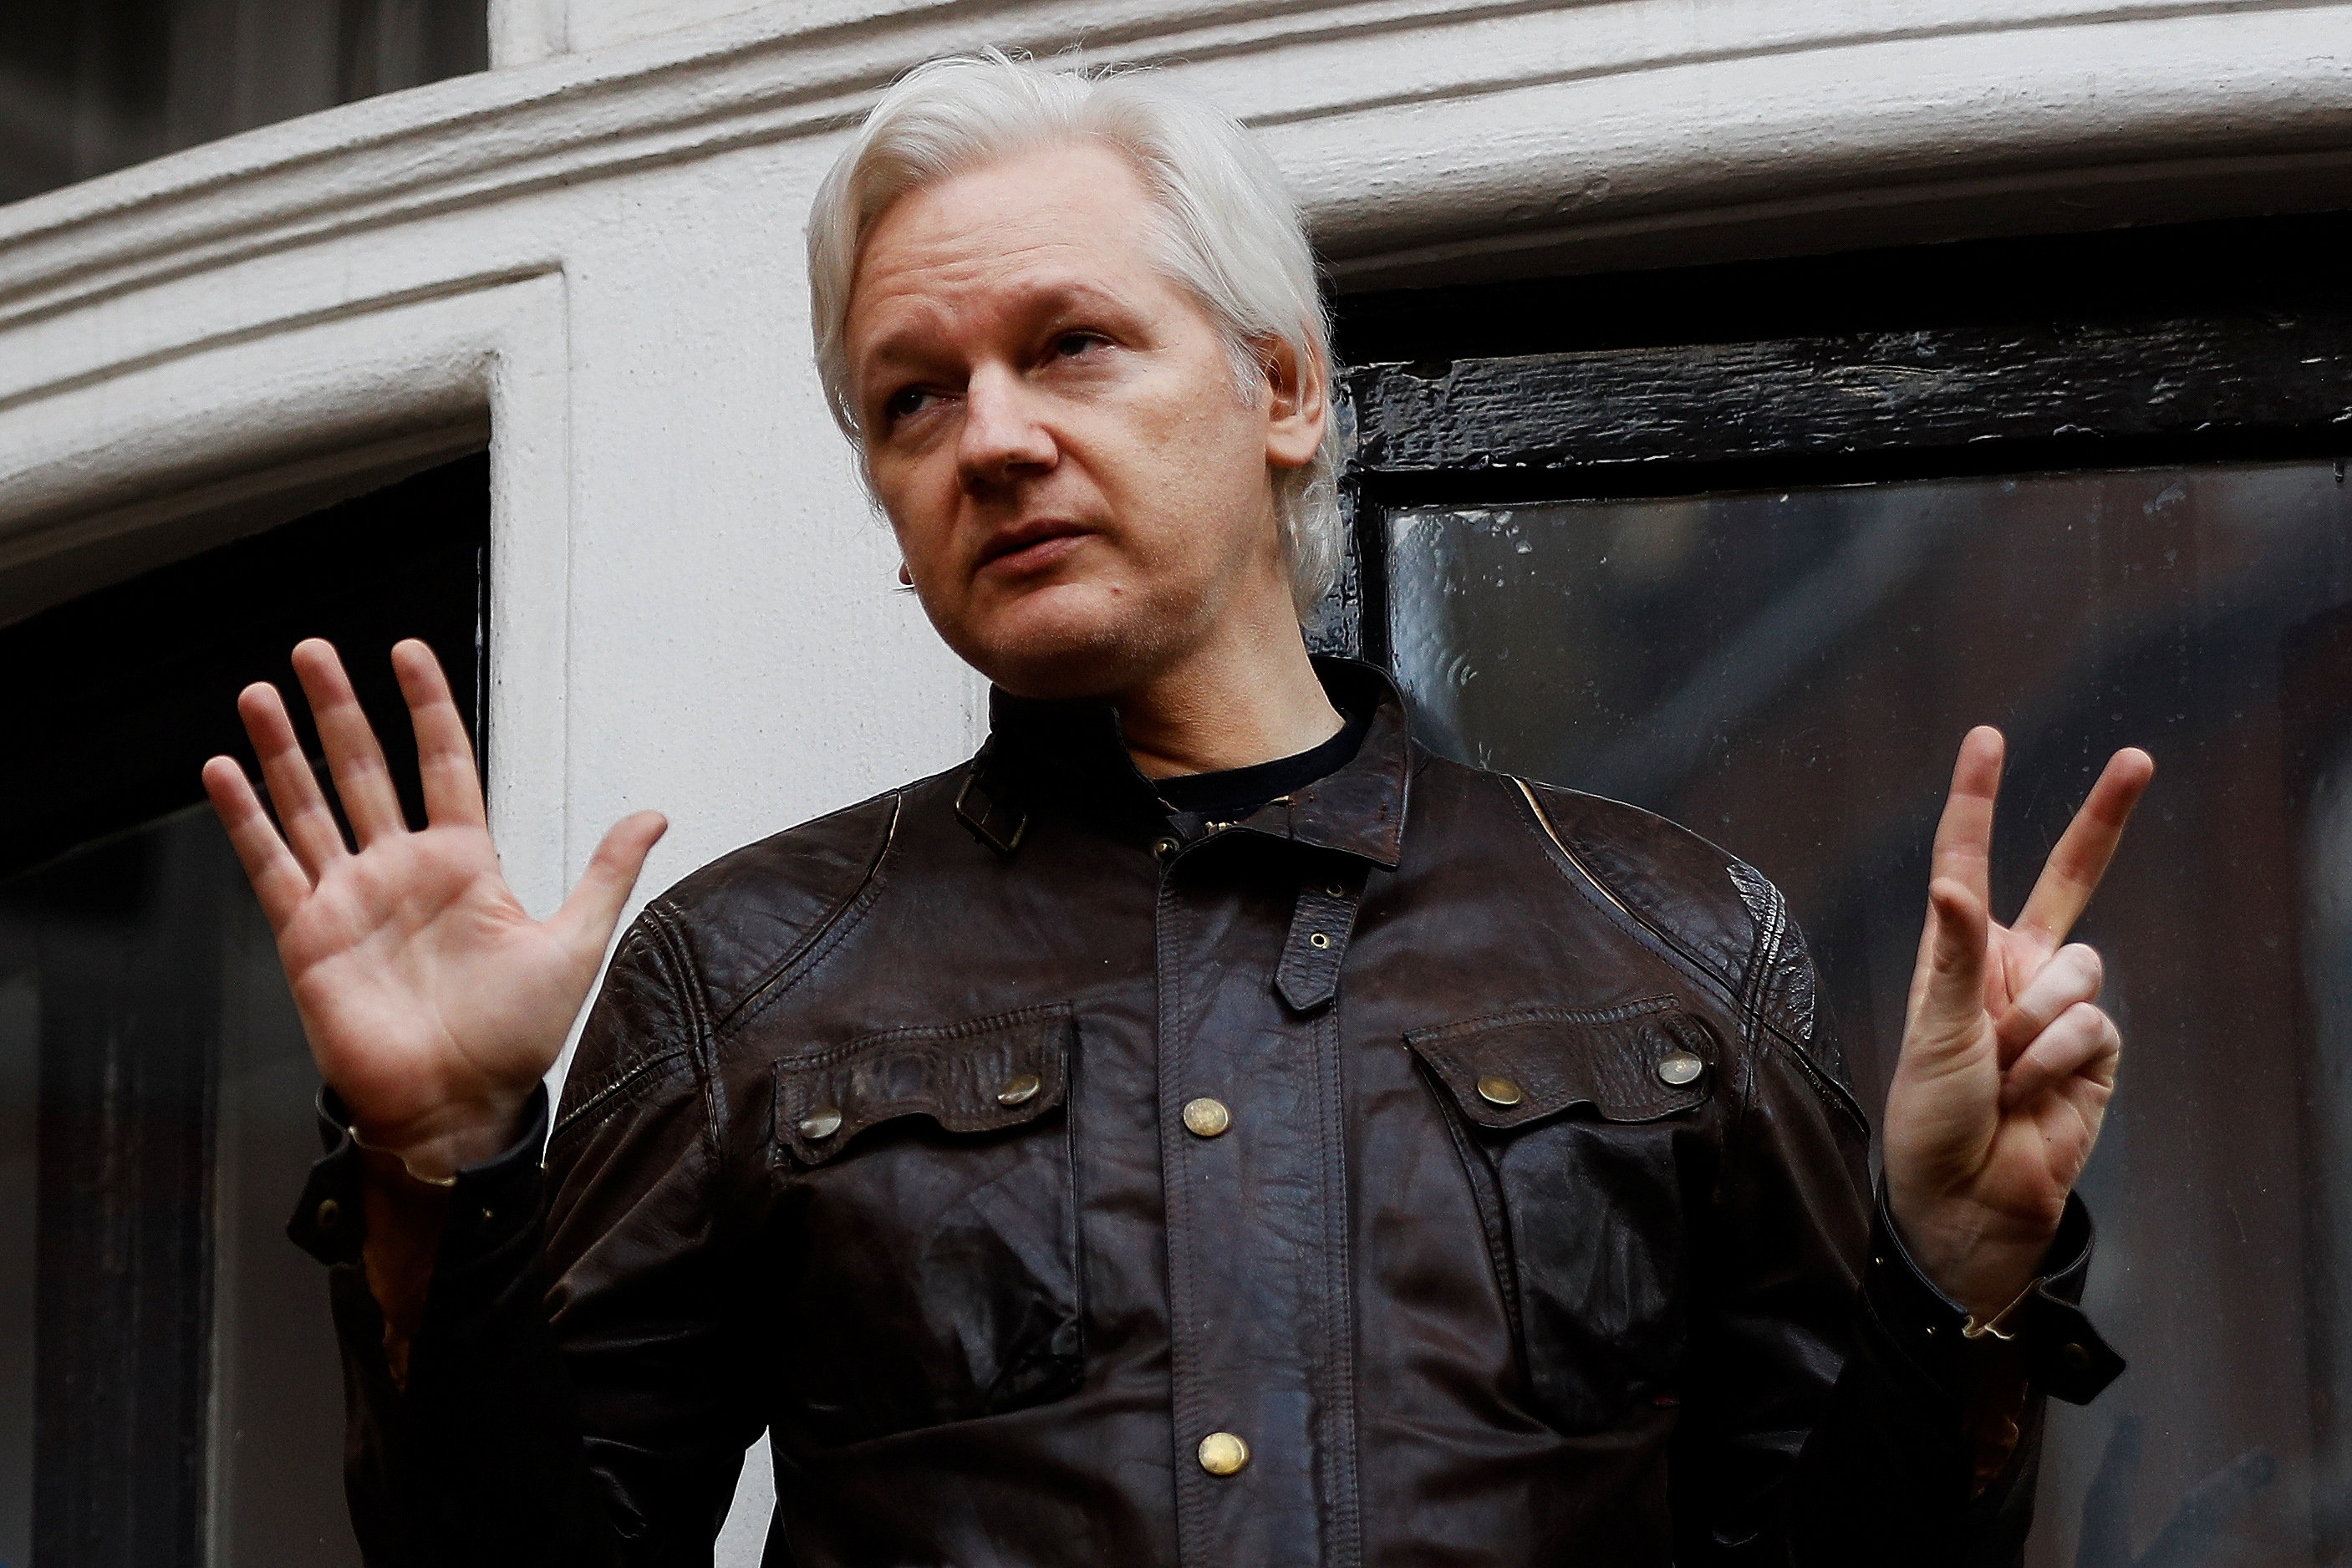 Assange loses bid to have UK arrest warrant dropped